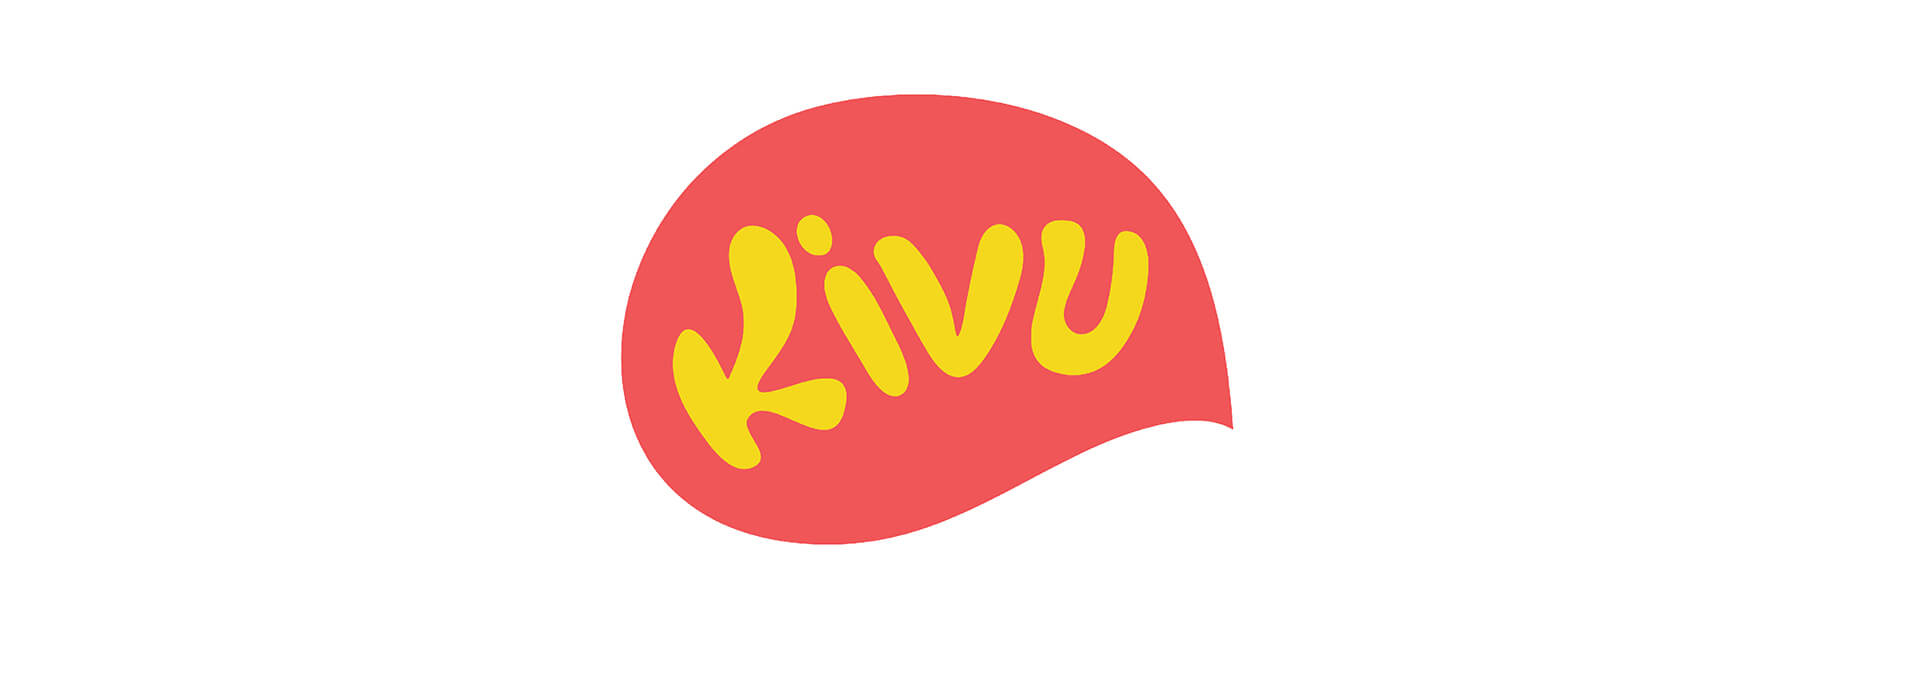 Kivu banner